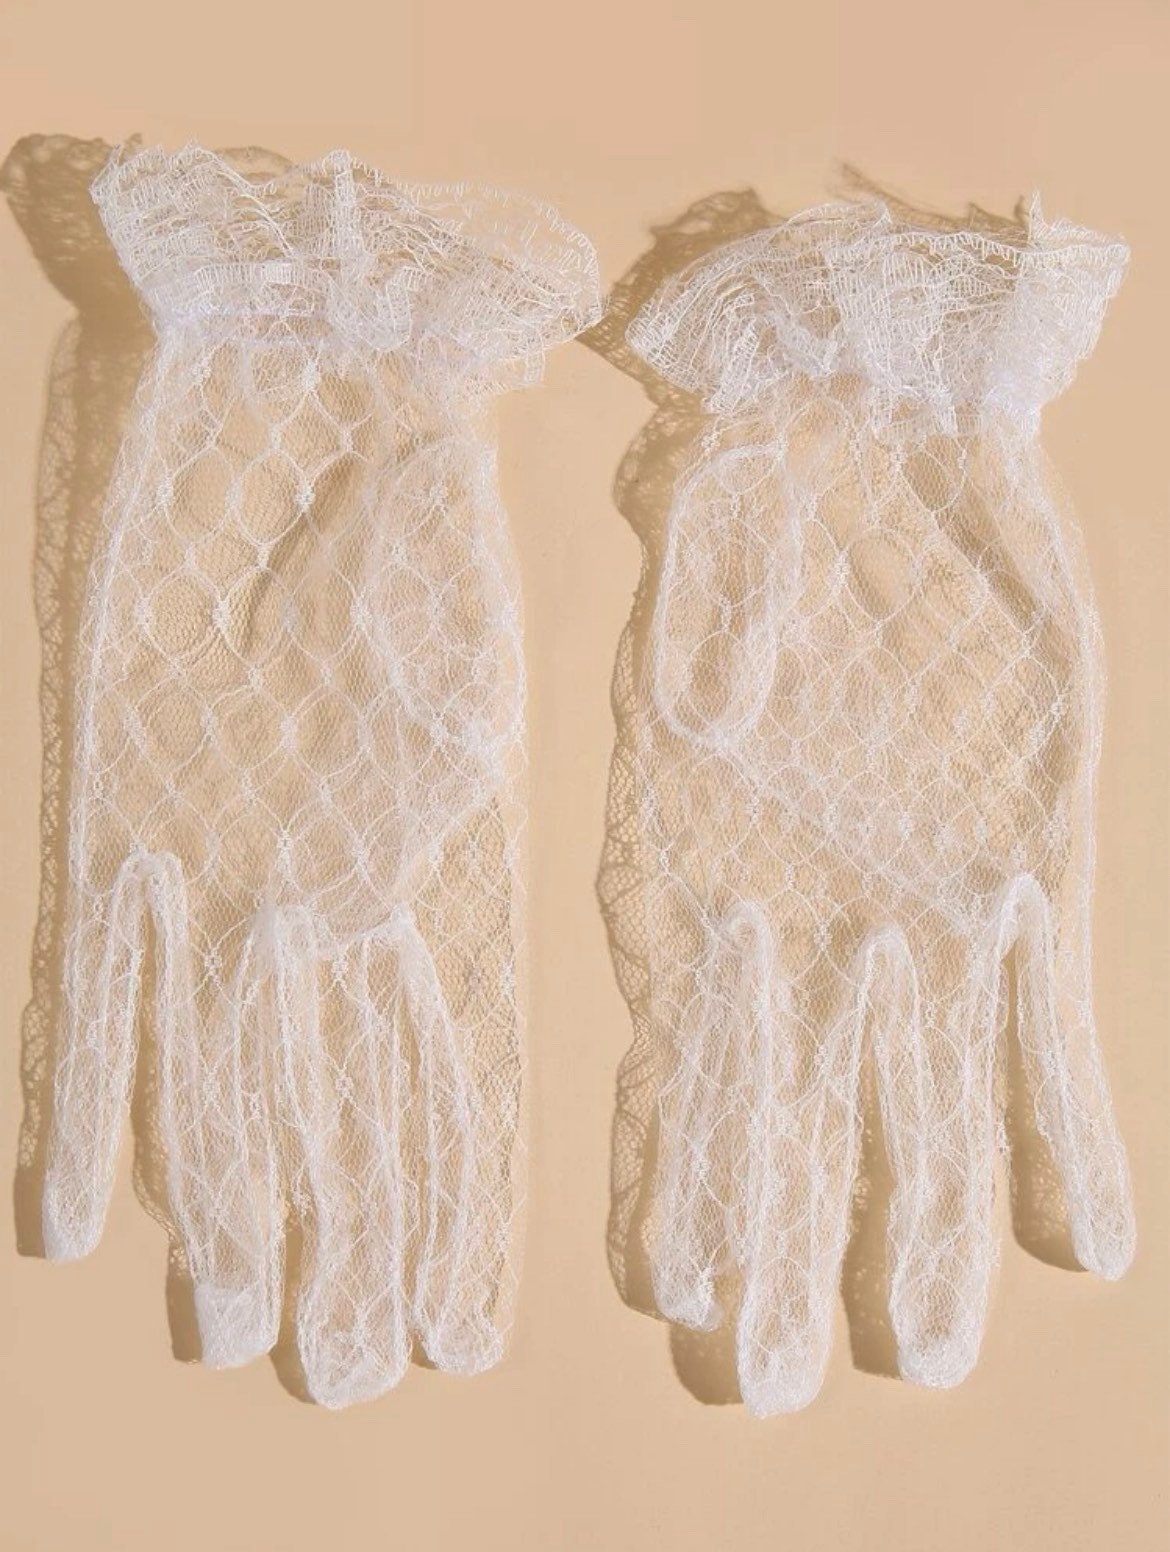 White lace fashion gloves